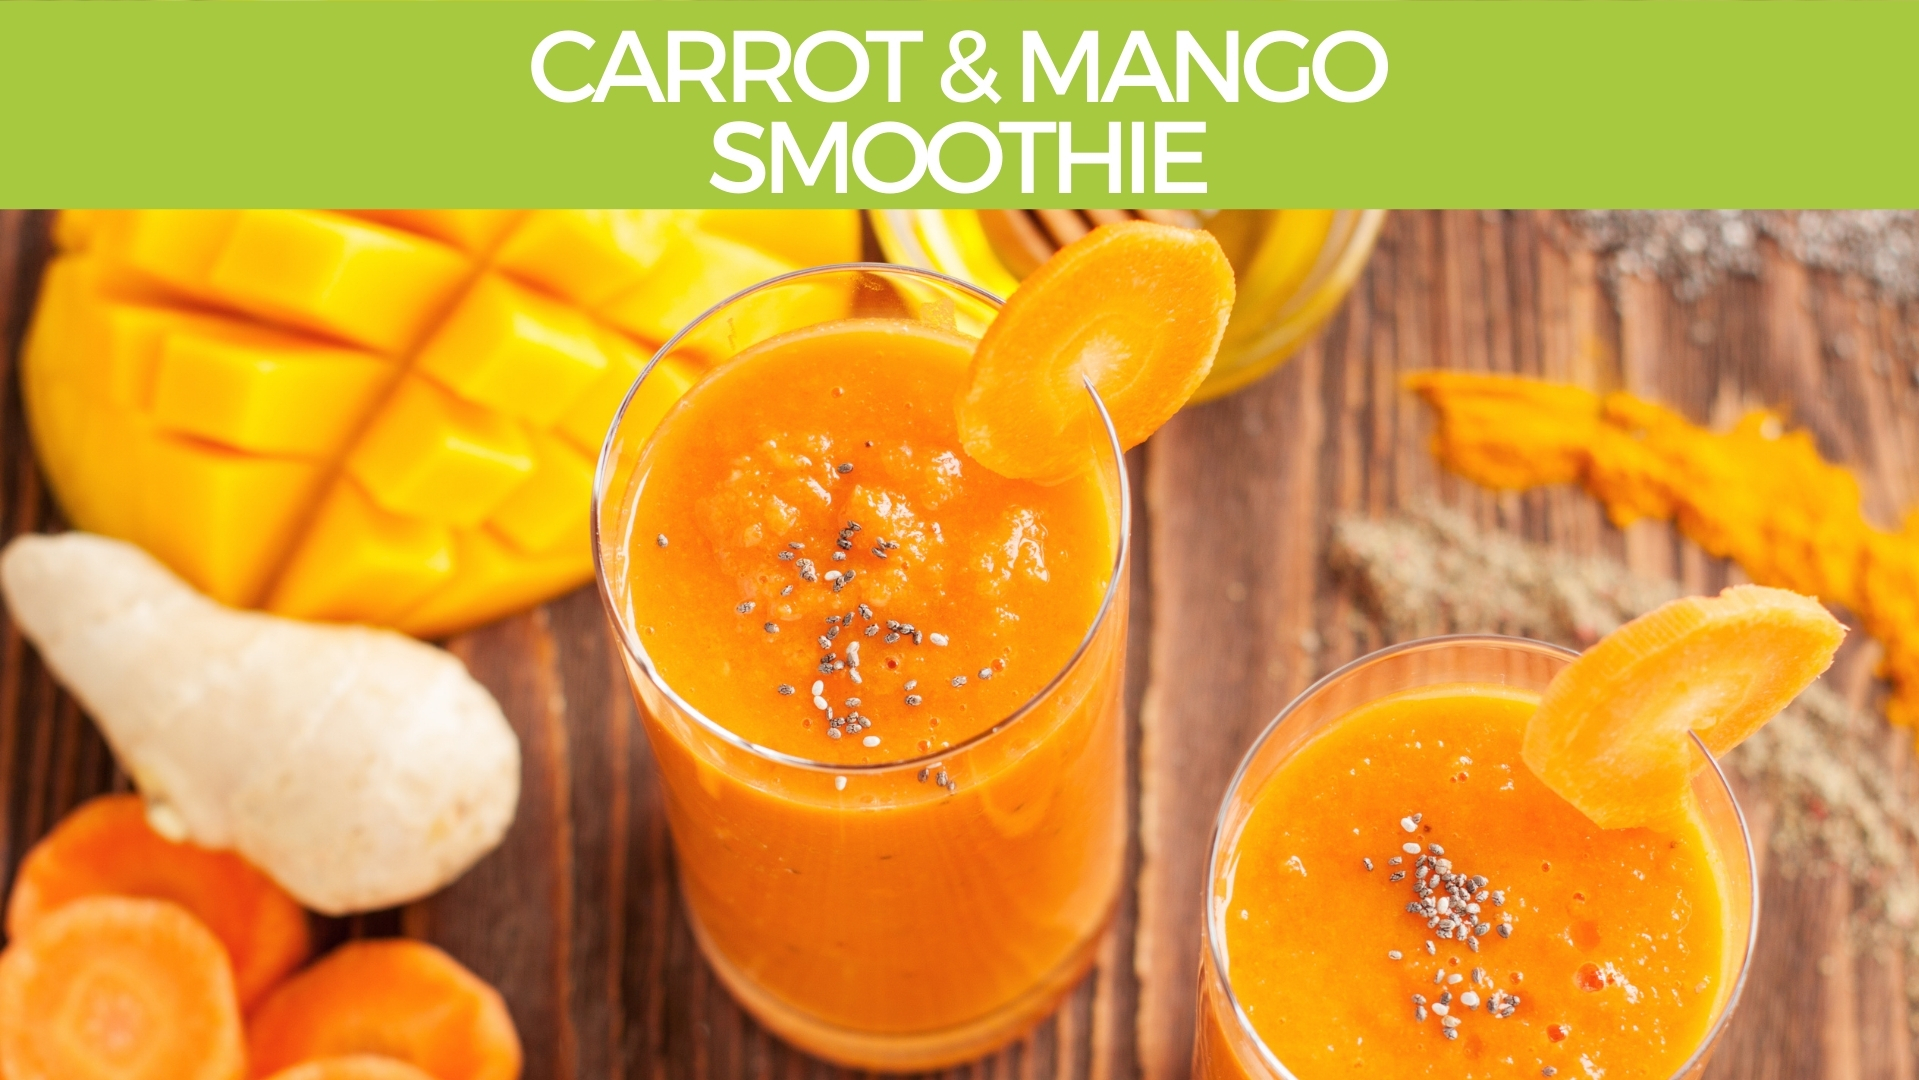 Carrot & Mango Smoothie - Brett Elliott